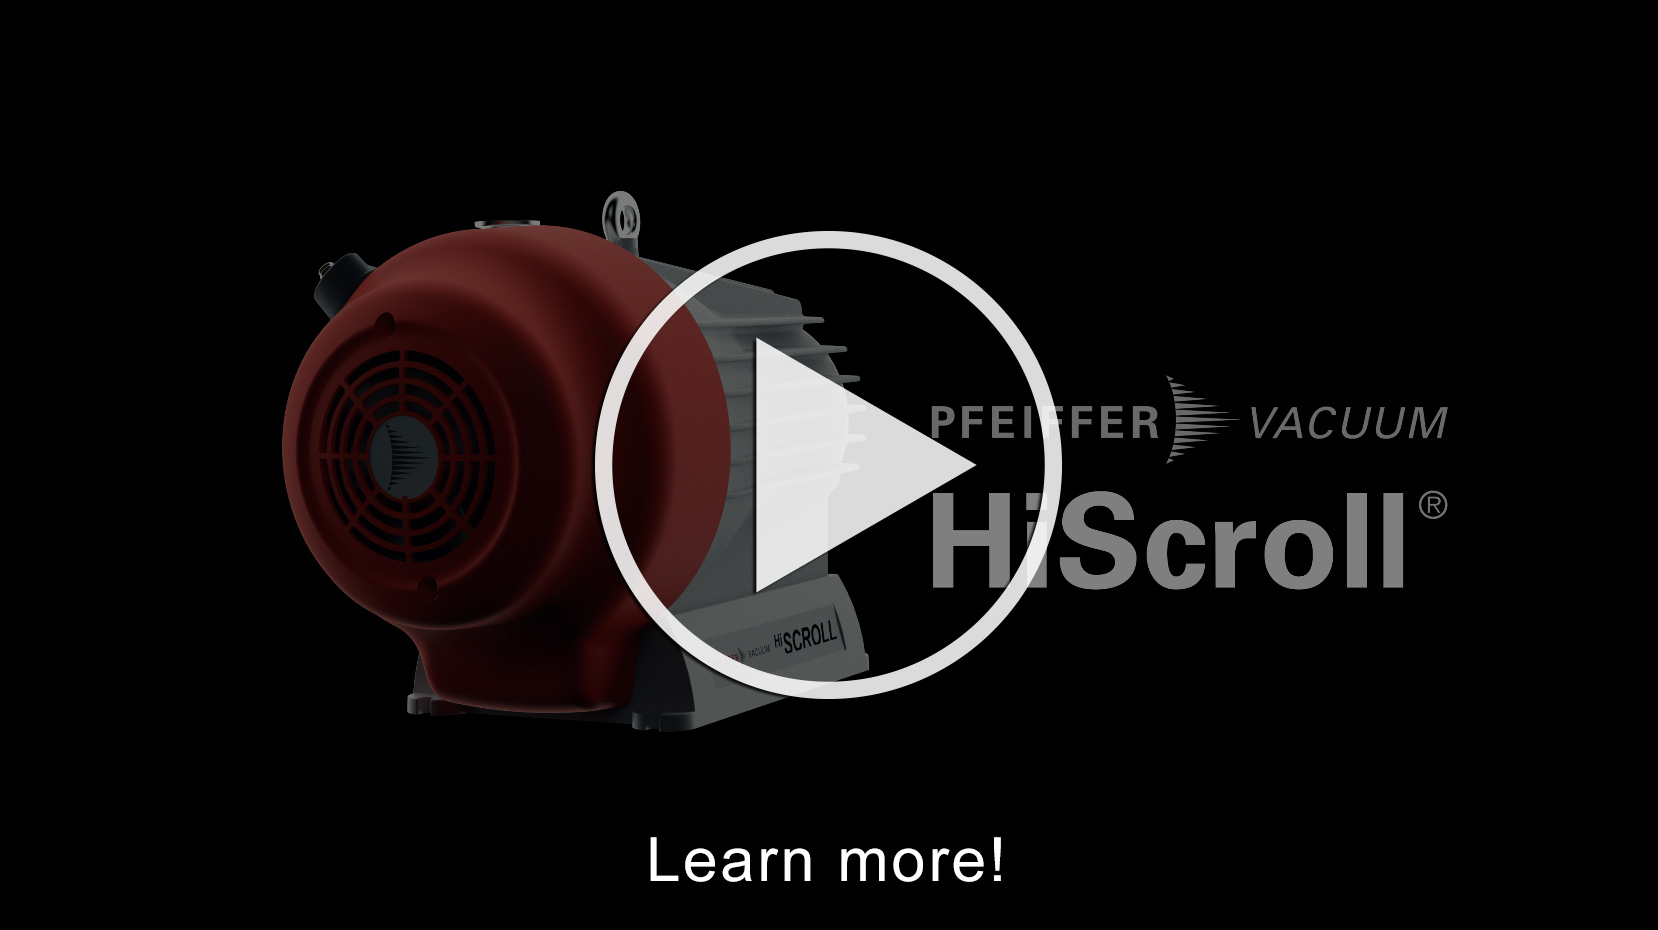 Pfeiffer Vacuum - HiScroll Imagevideo